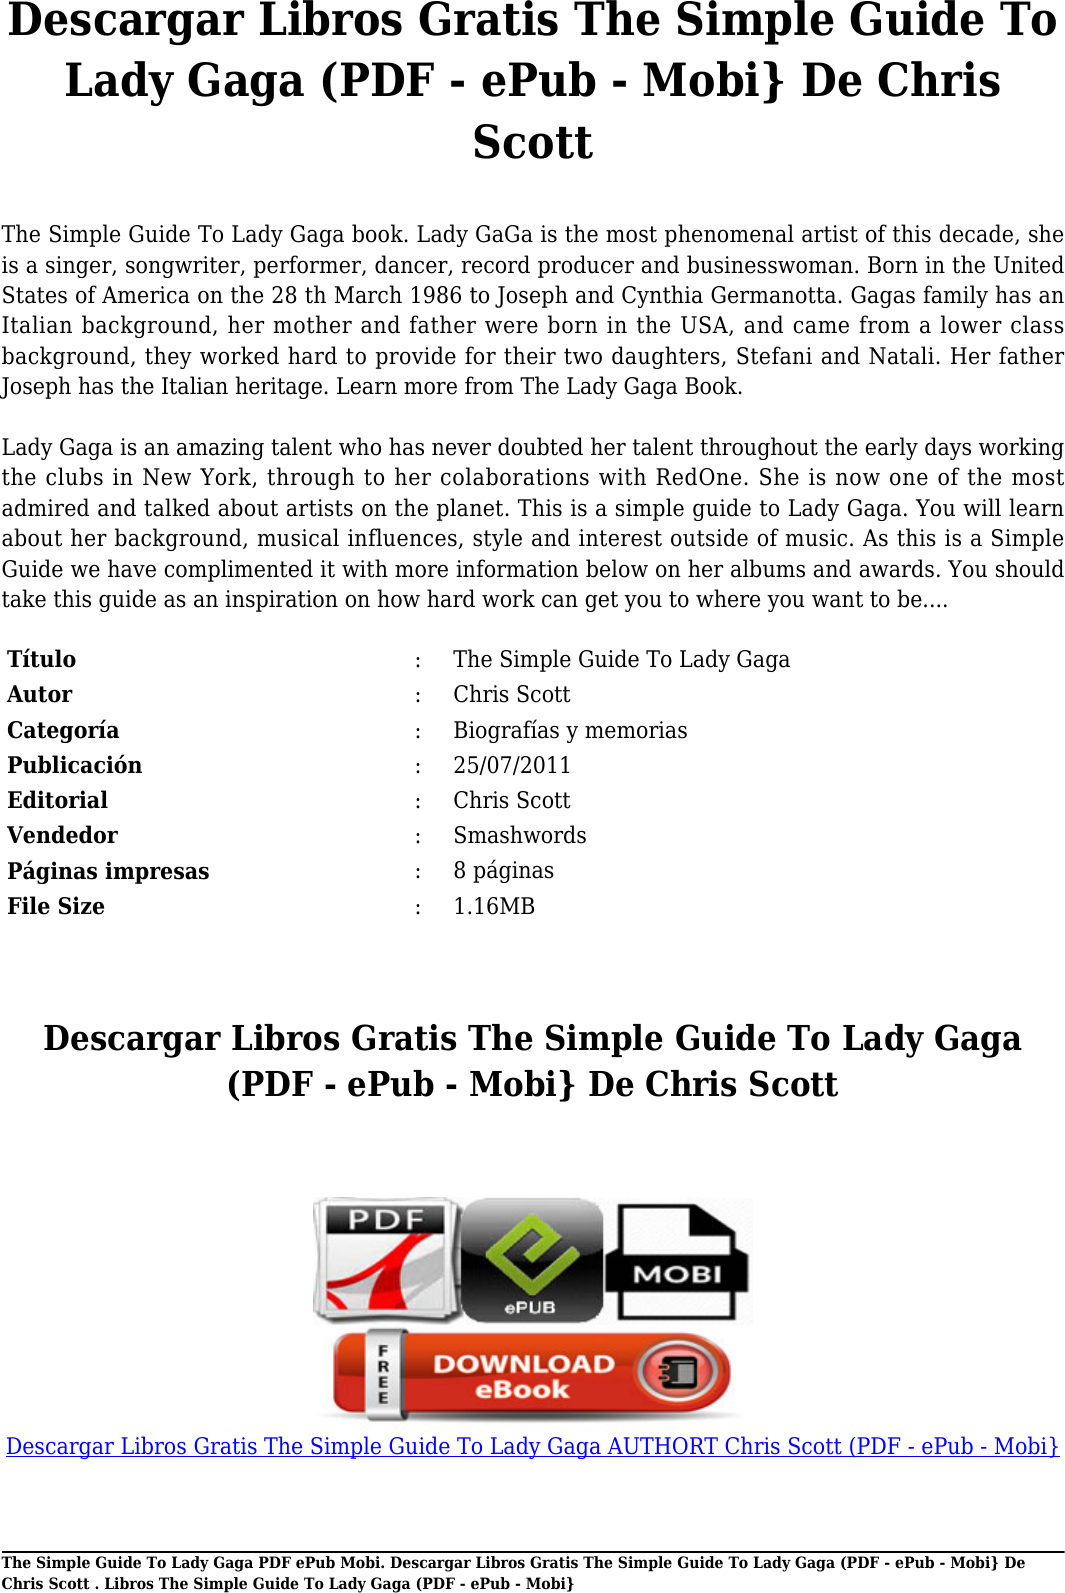 Page 2 of 10 - Descargar Libro Gratis The Simple Guide To Lady Gaga AUTHORT Chris Scott(PDF - EPub Mobi} Libros (PDF E Pub De Scott